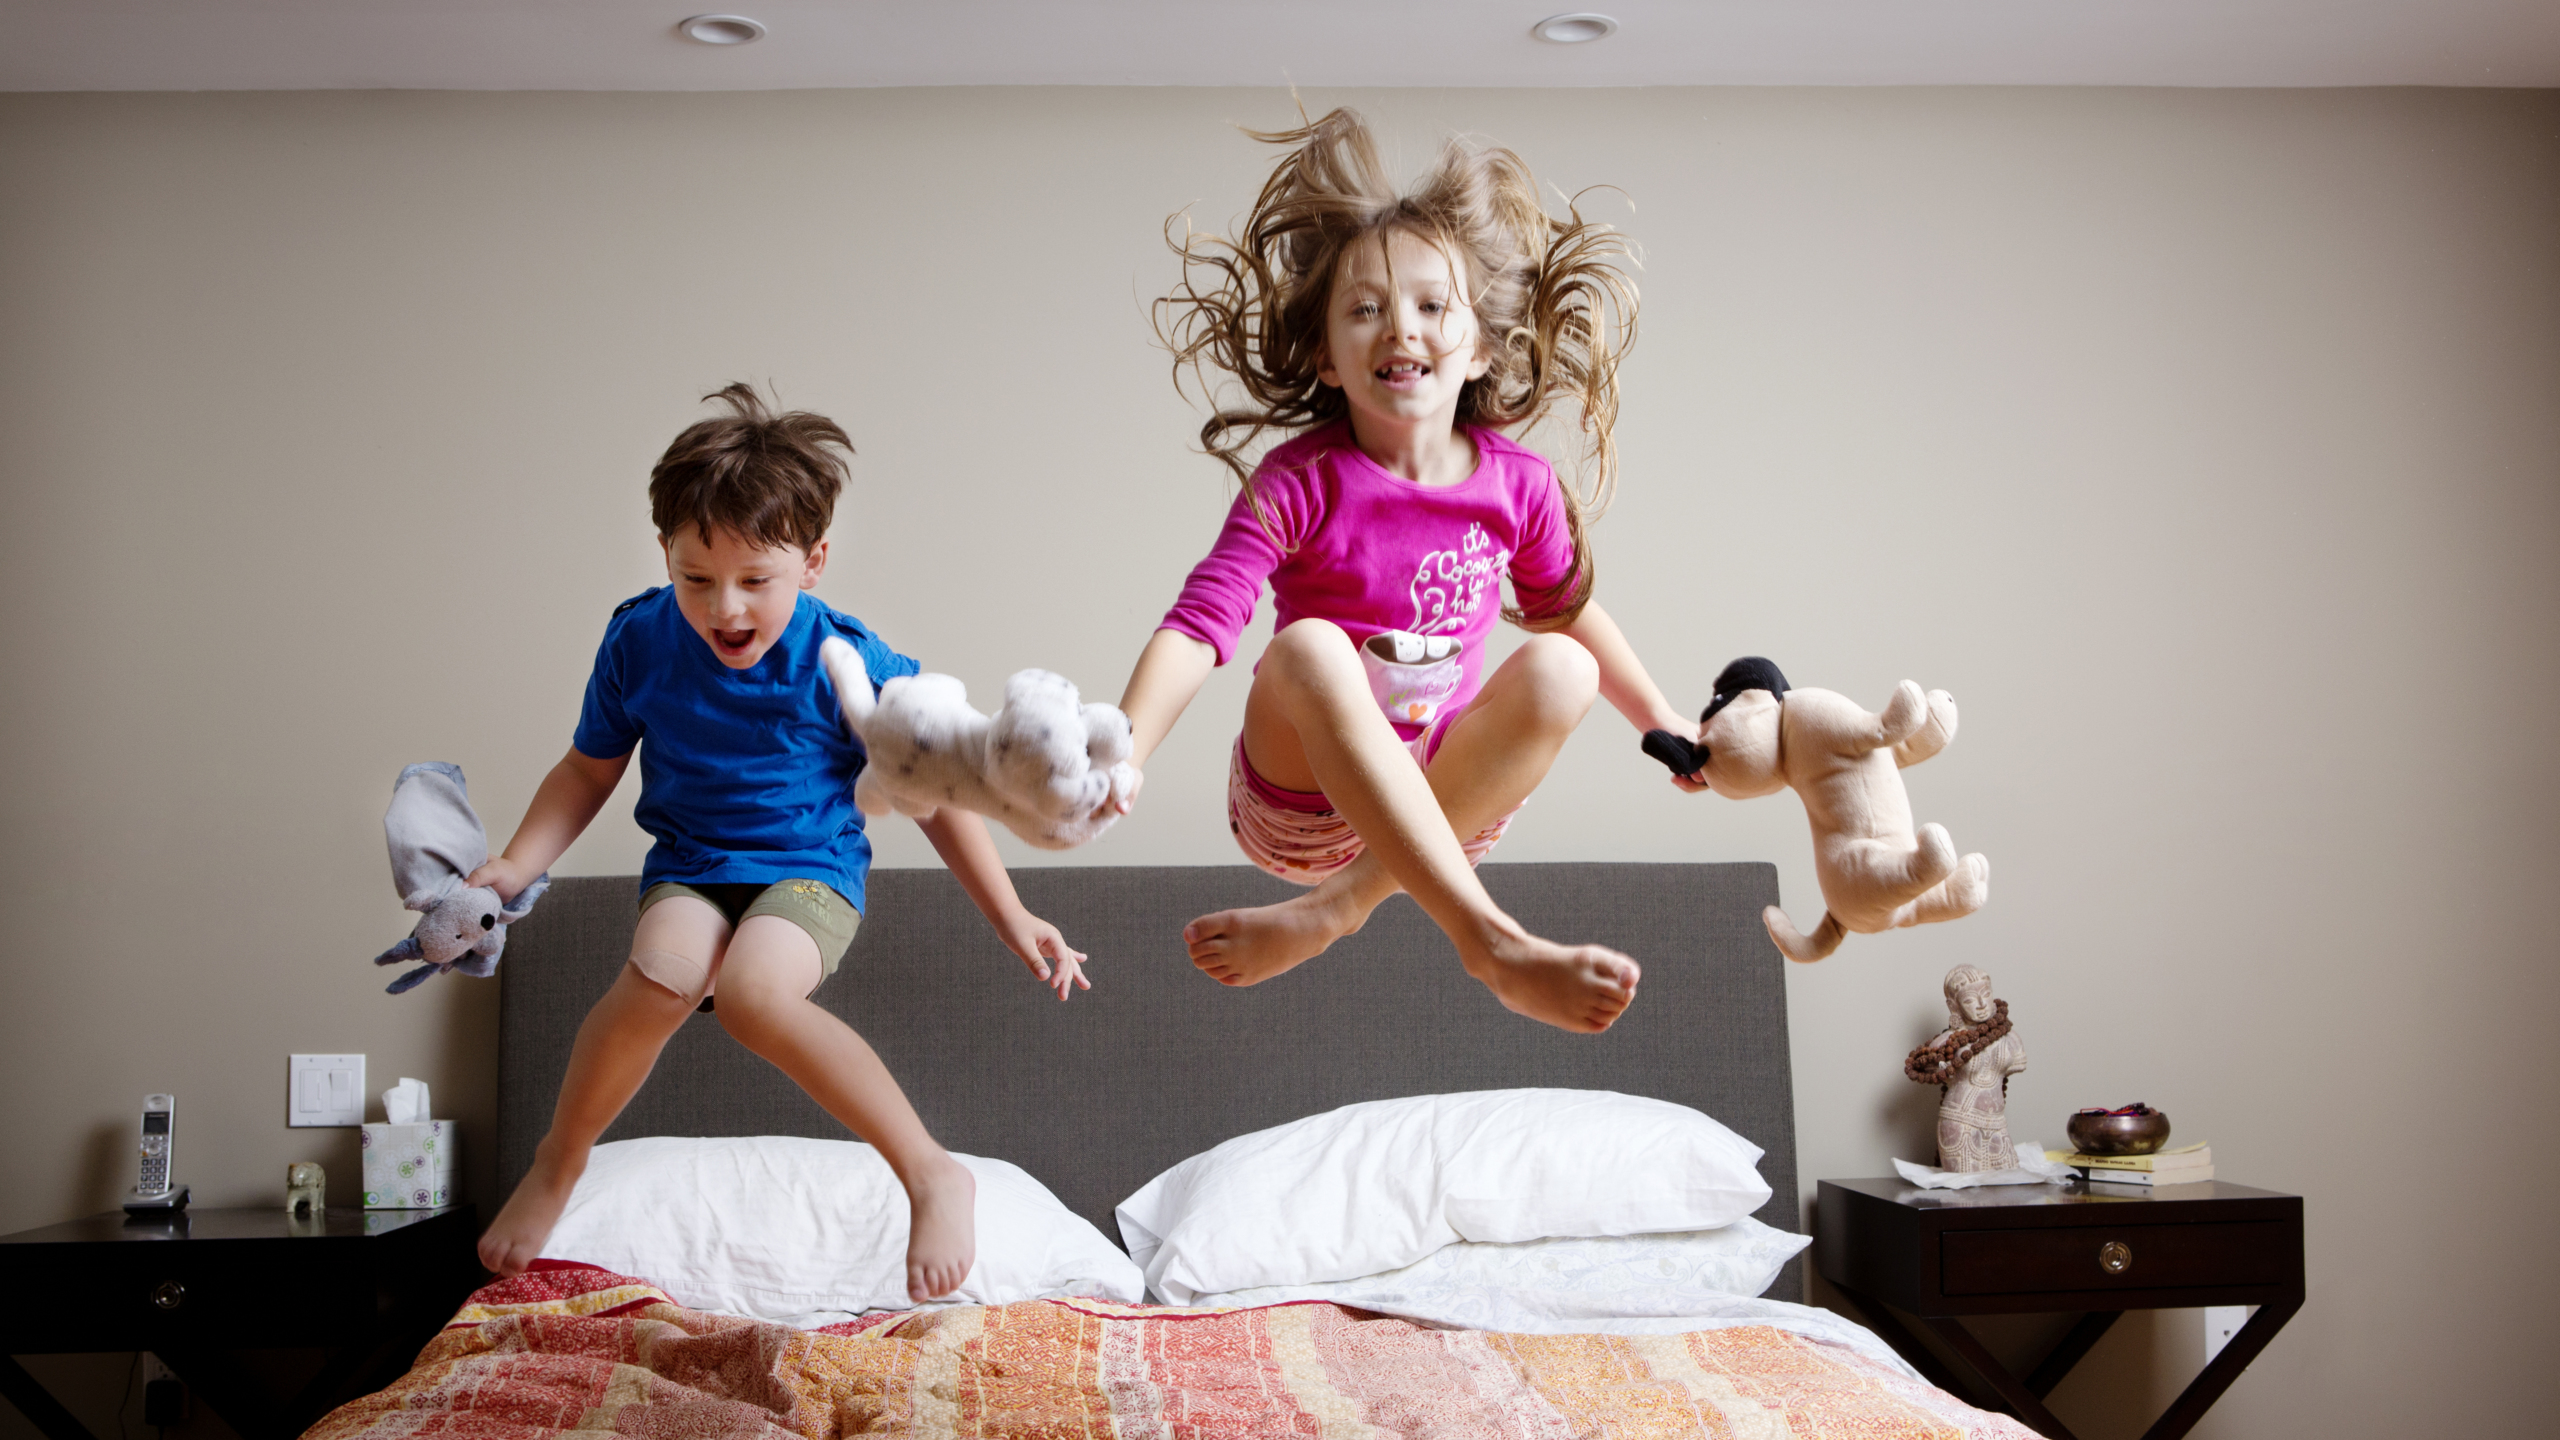 Дети прыгают на кровати